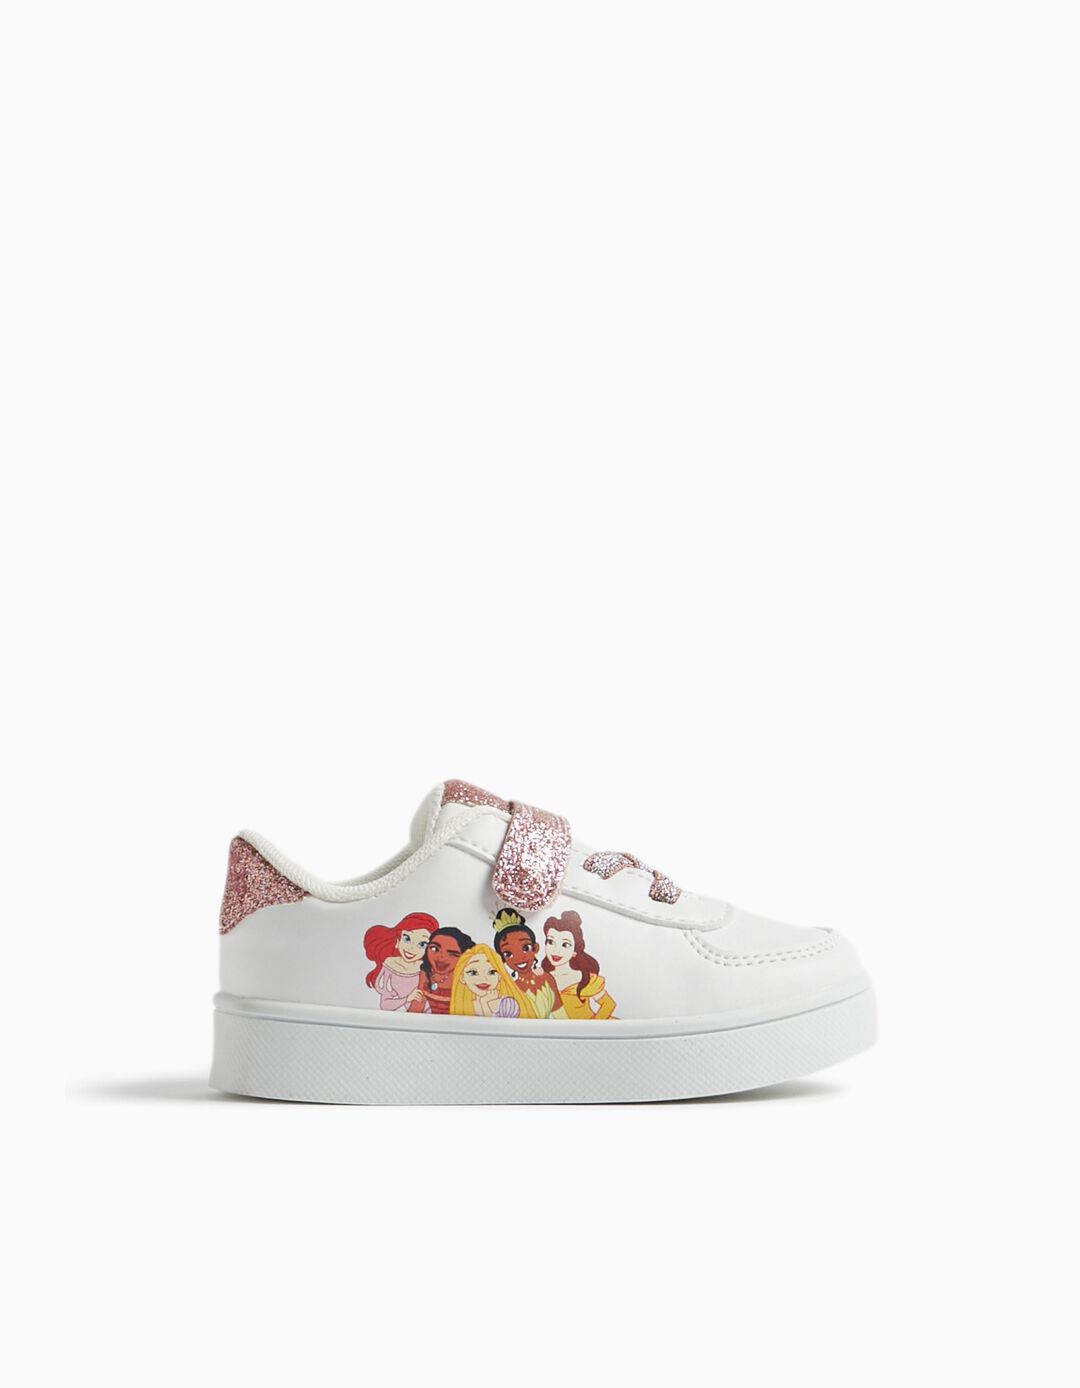 'Disney' Sneakers, Baby Girl, White